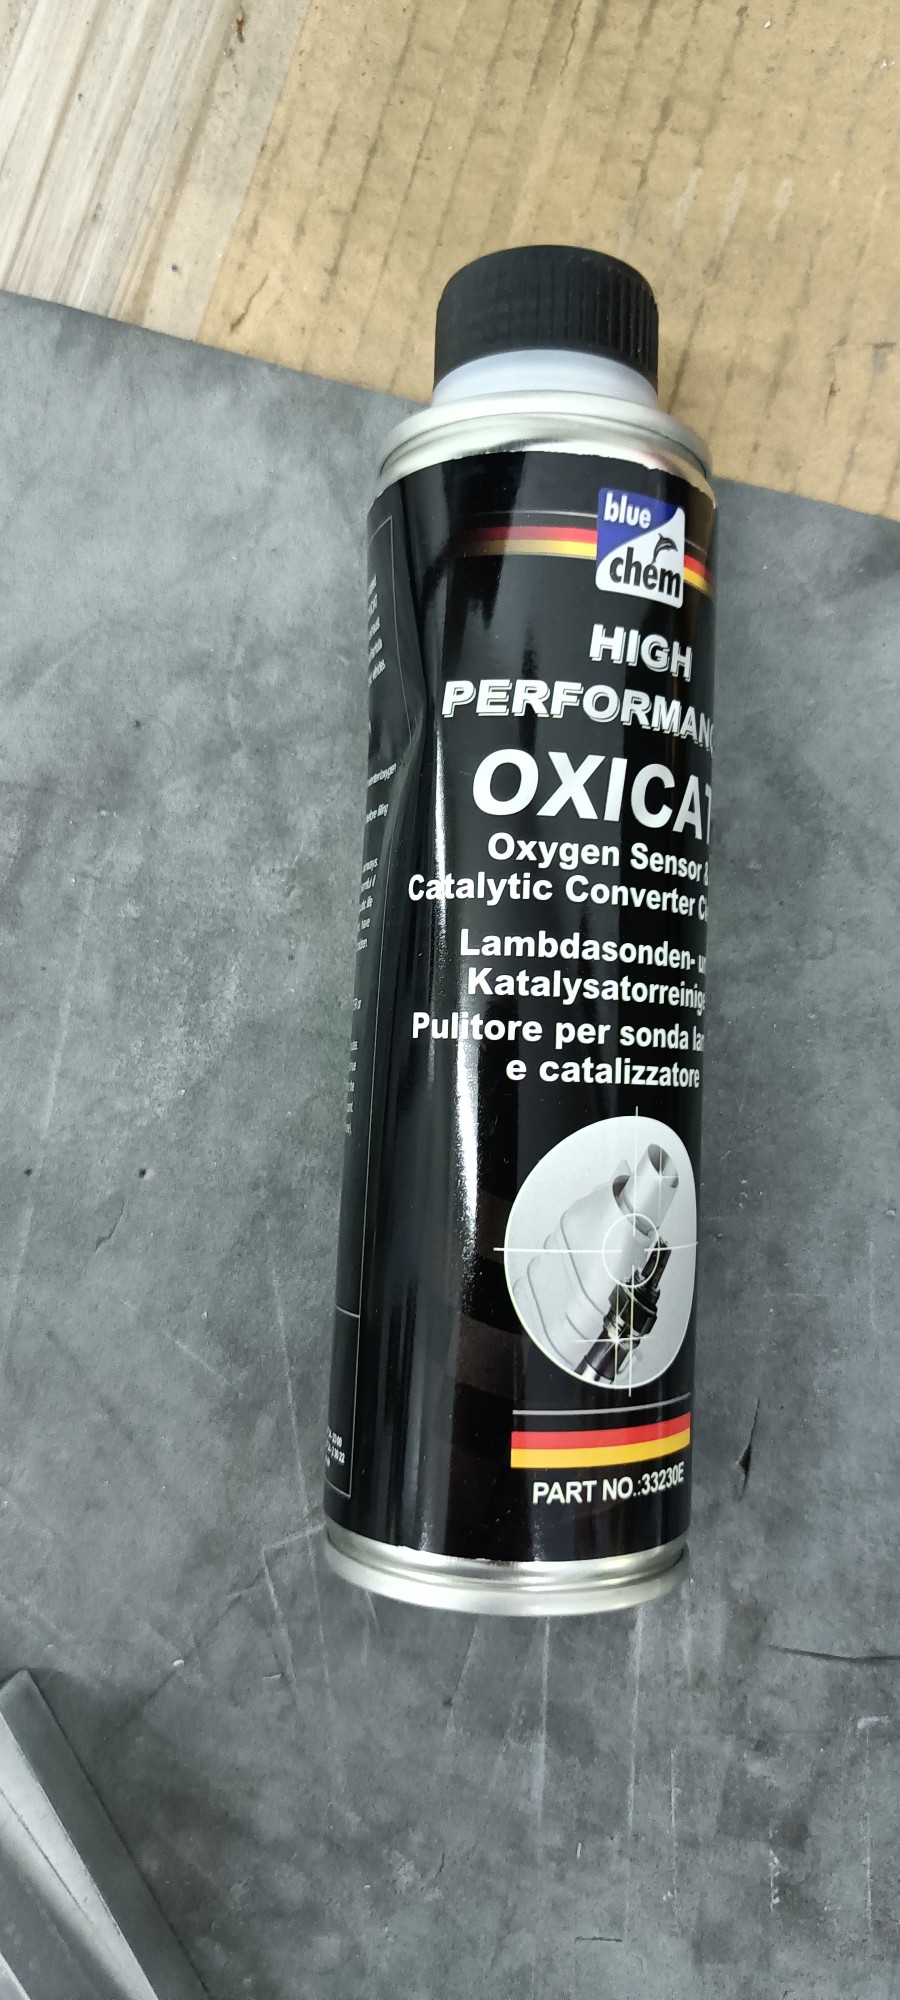 BlueChem OXICAT - Oxygen Sensor & Catalytic Converter Cleaner